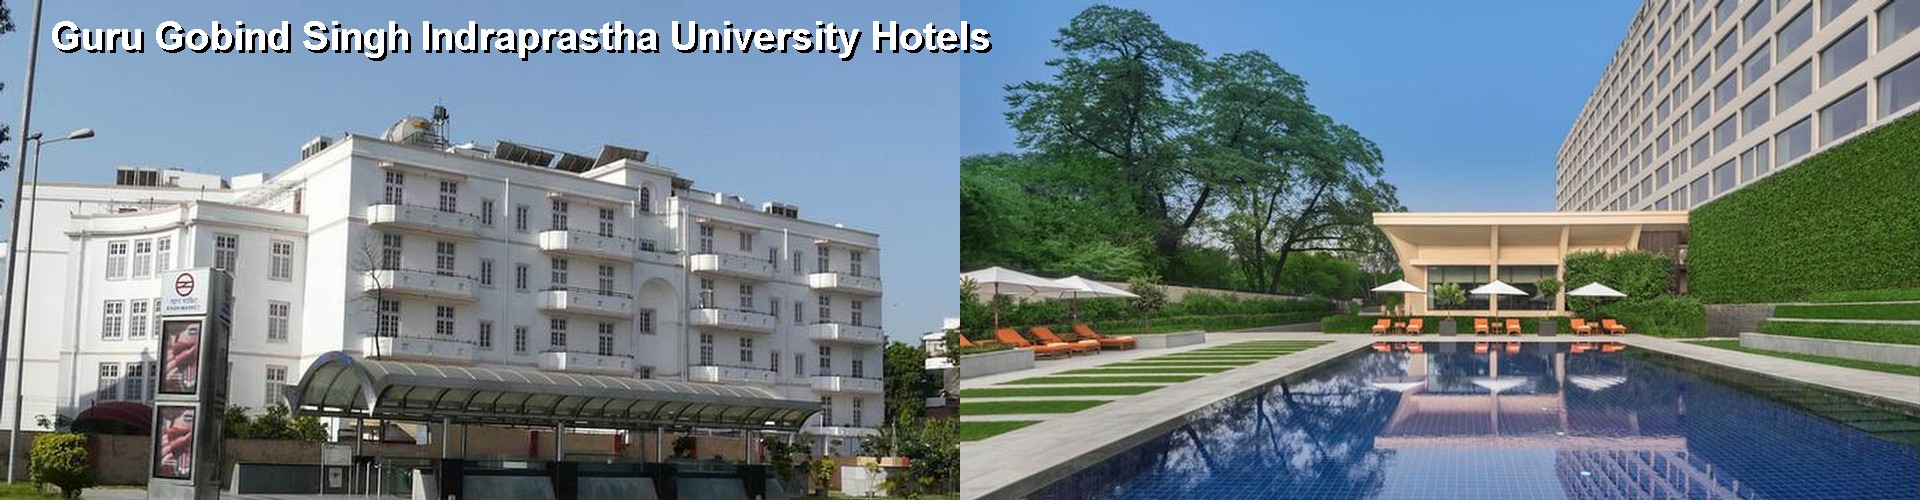 4 Best Hotels near Guru Gobind Singh Indraprastha University